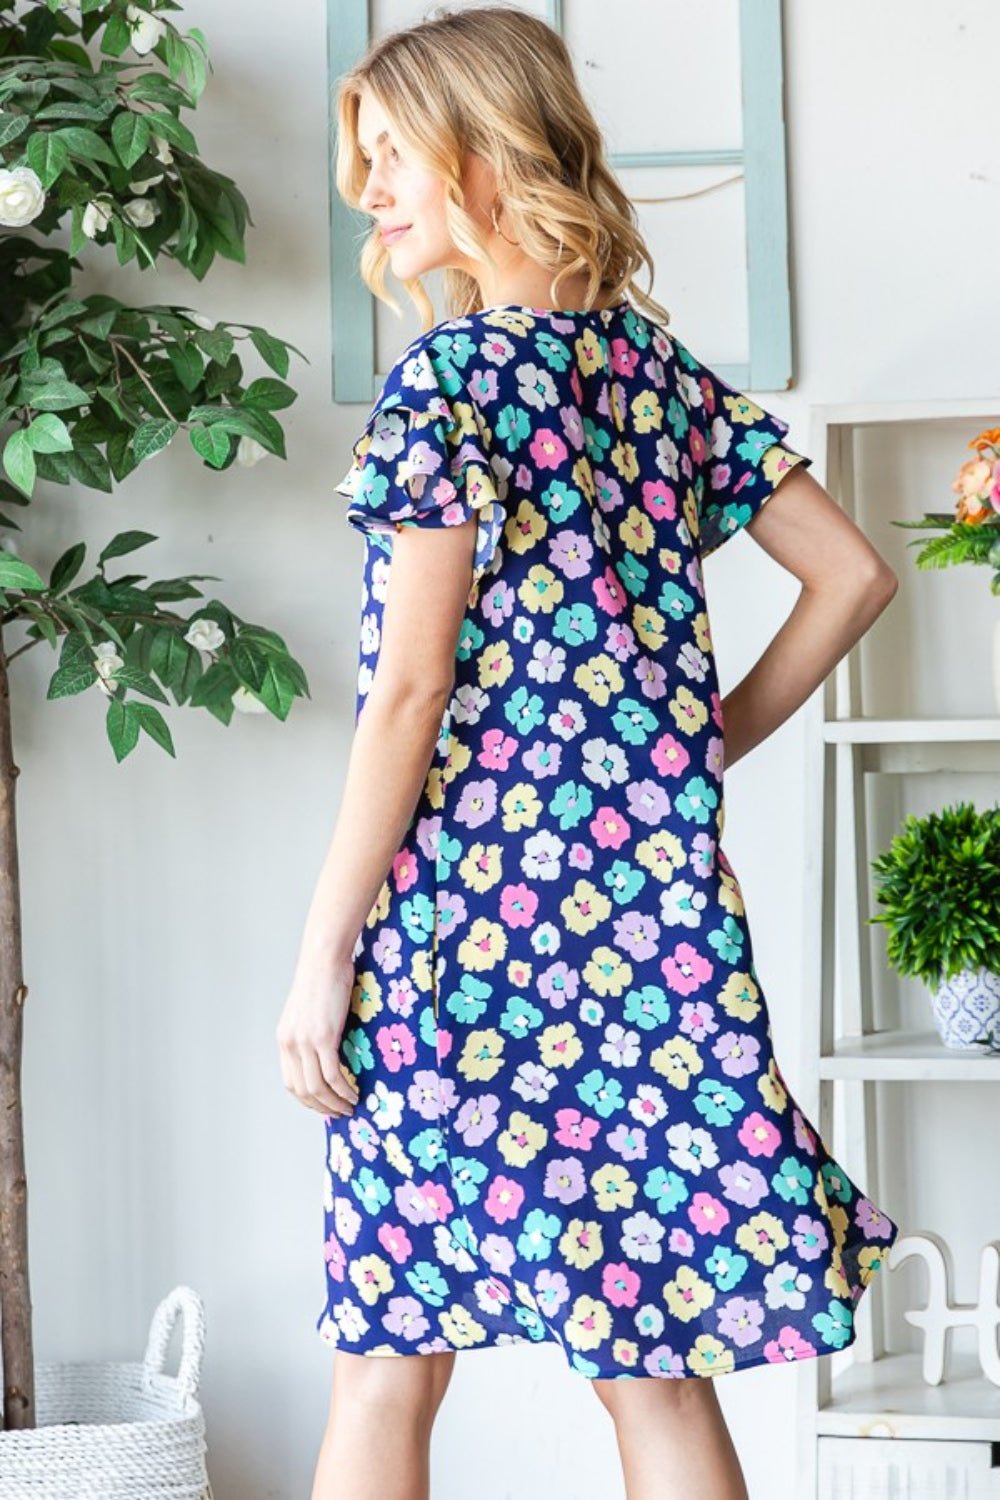 Ruffle Sleeve Knee-Length Dress with Pockets in Navy FloralKnee-Length DressHeimish